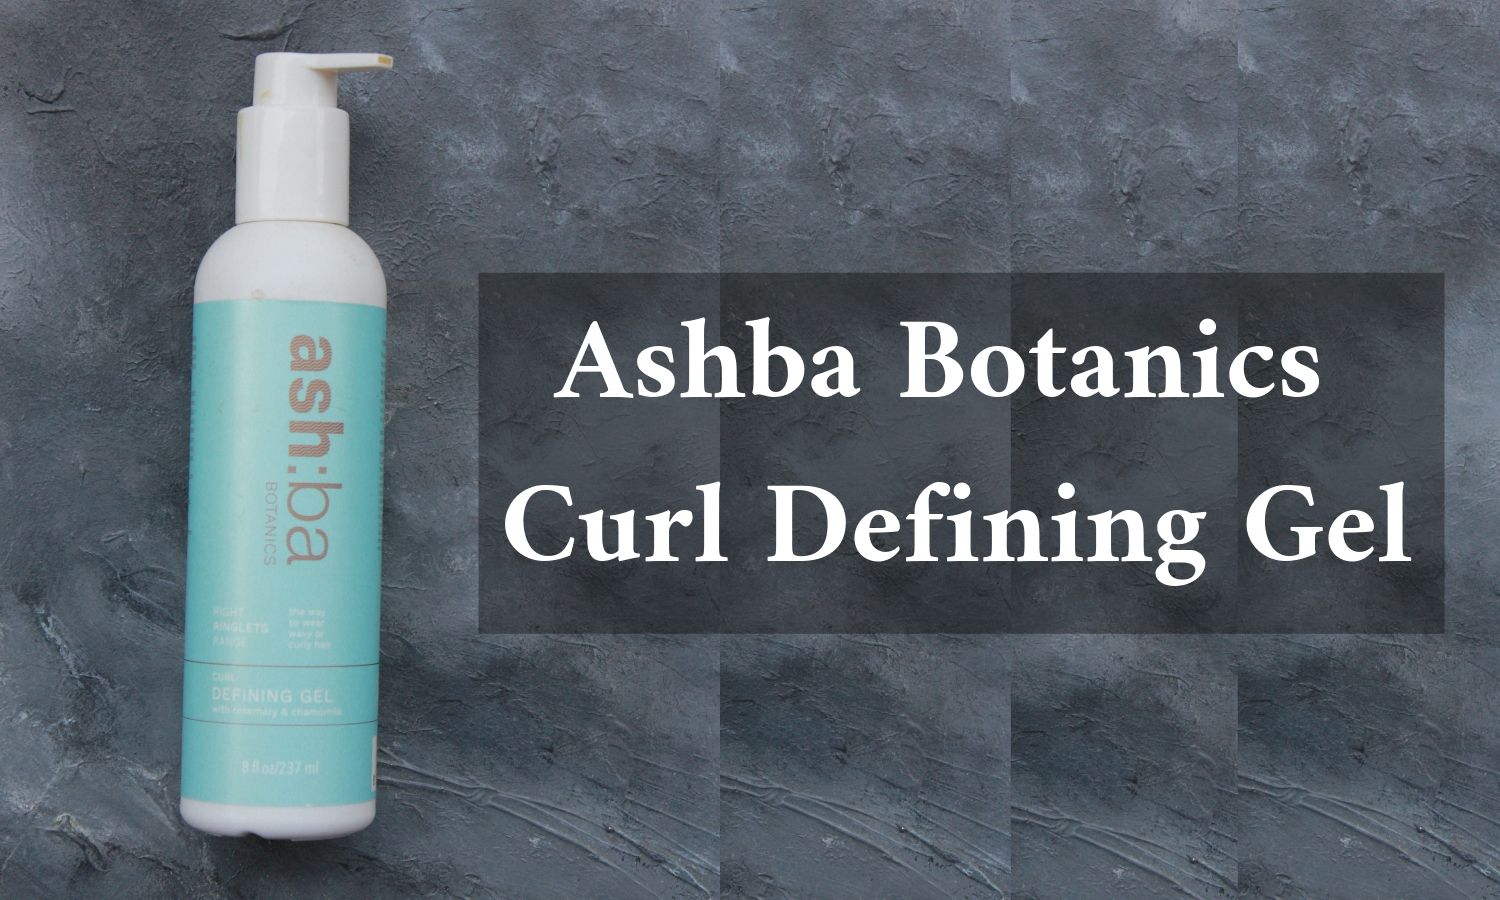 Ashba Botanics Curl Defining Gel Cover Image